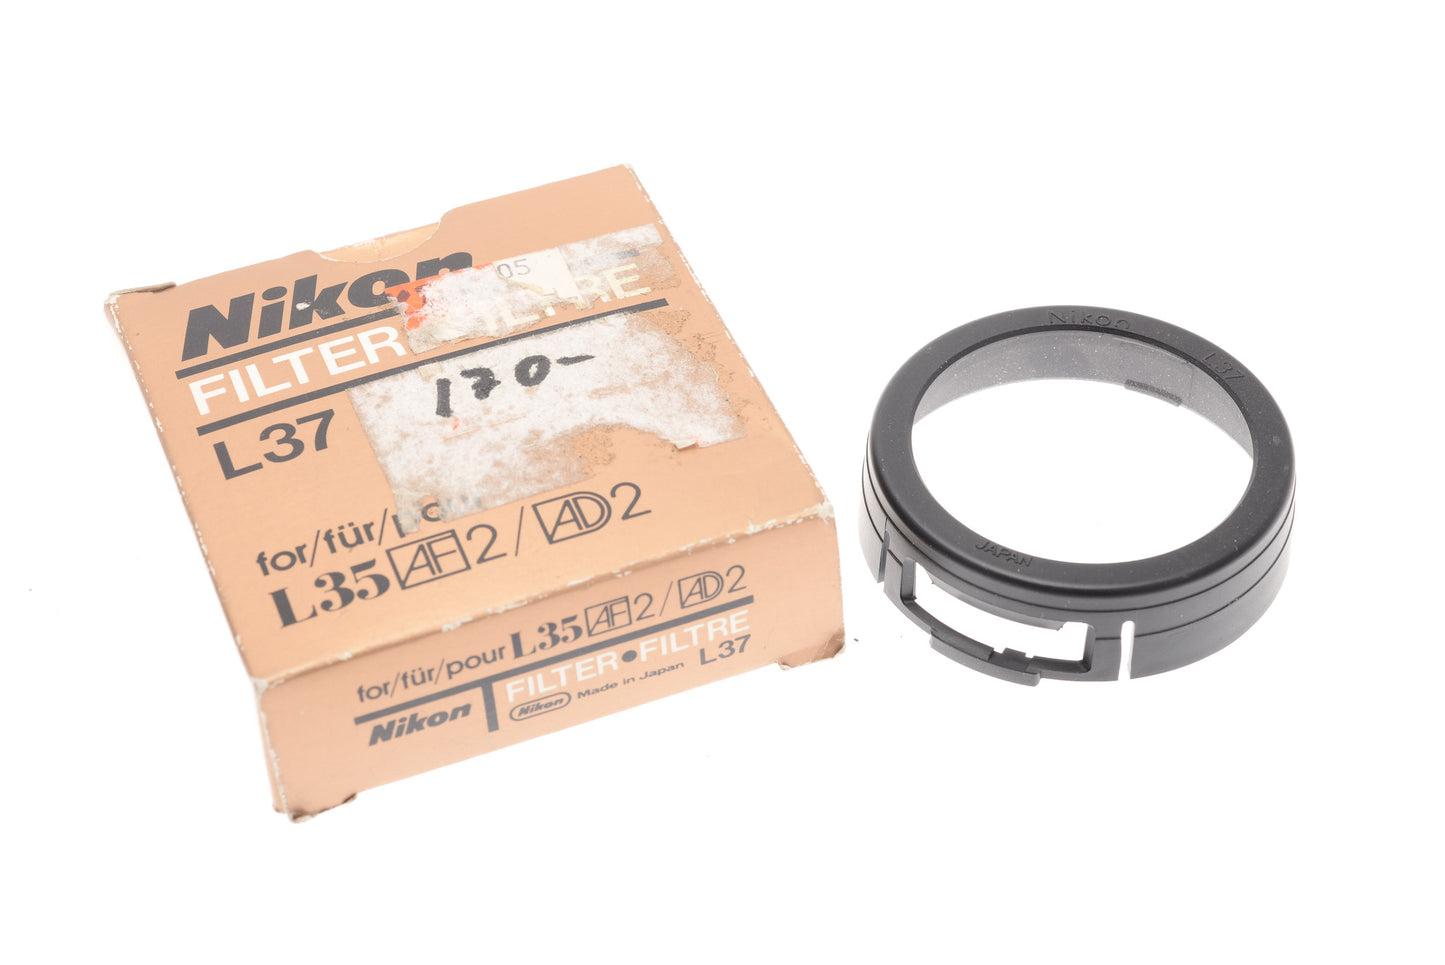 Nikon L37 UV Filter for L35AF2 / AD2 - Accessory